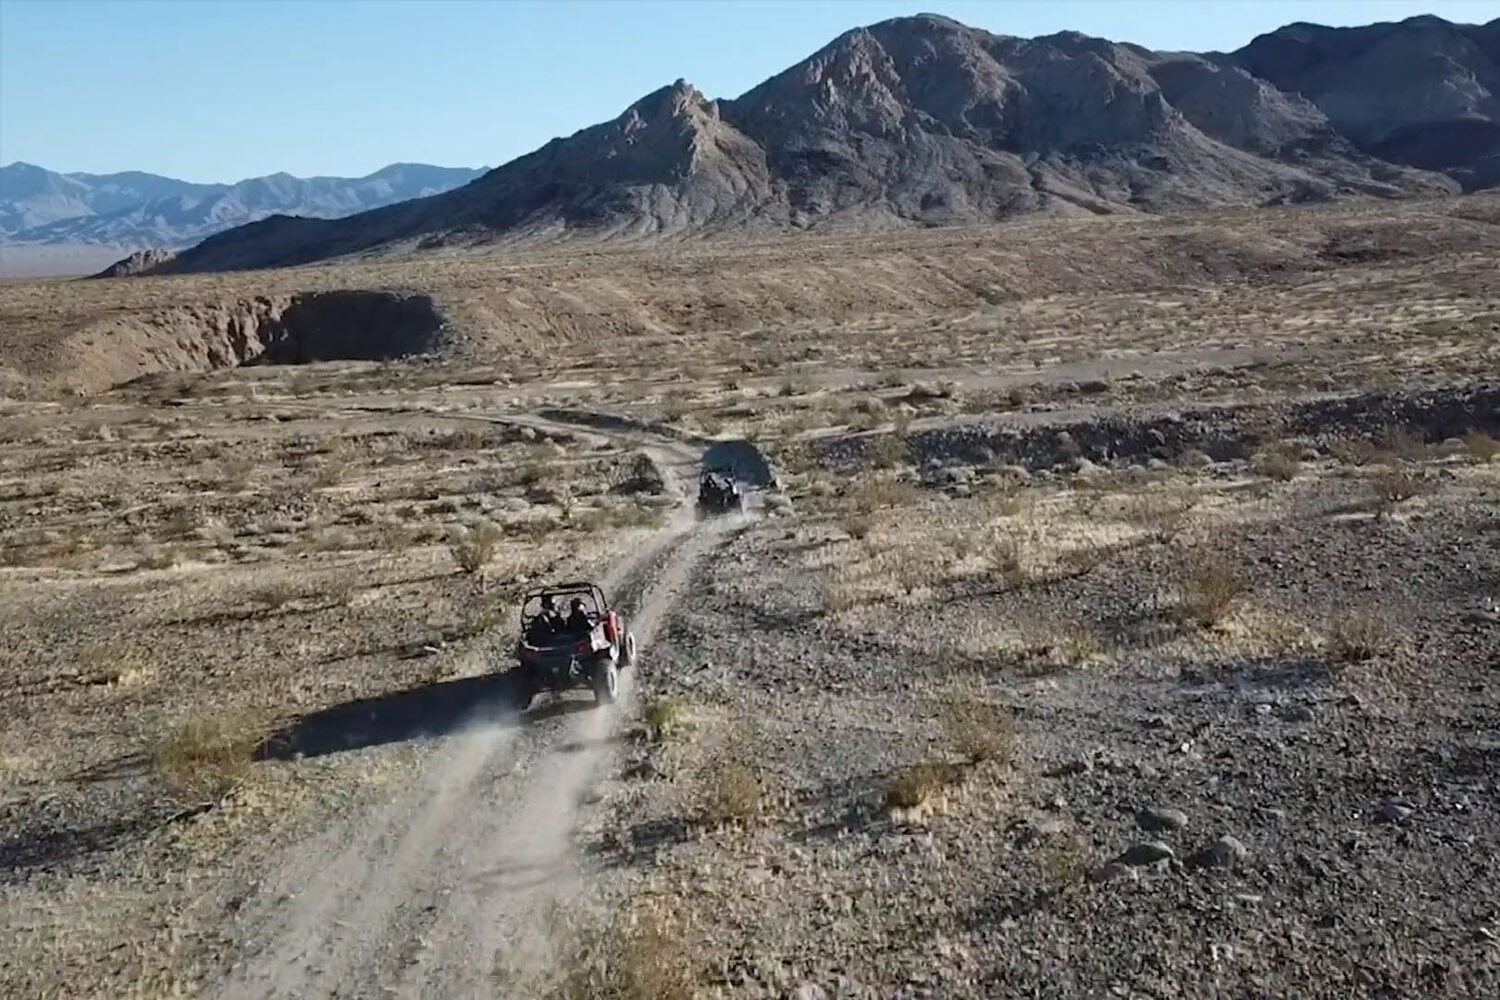 One ATV guiding another through a vast desert wilderness